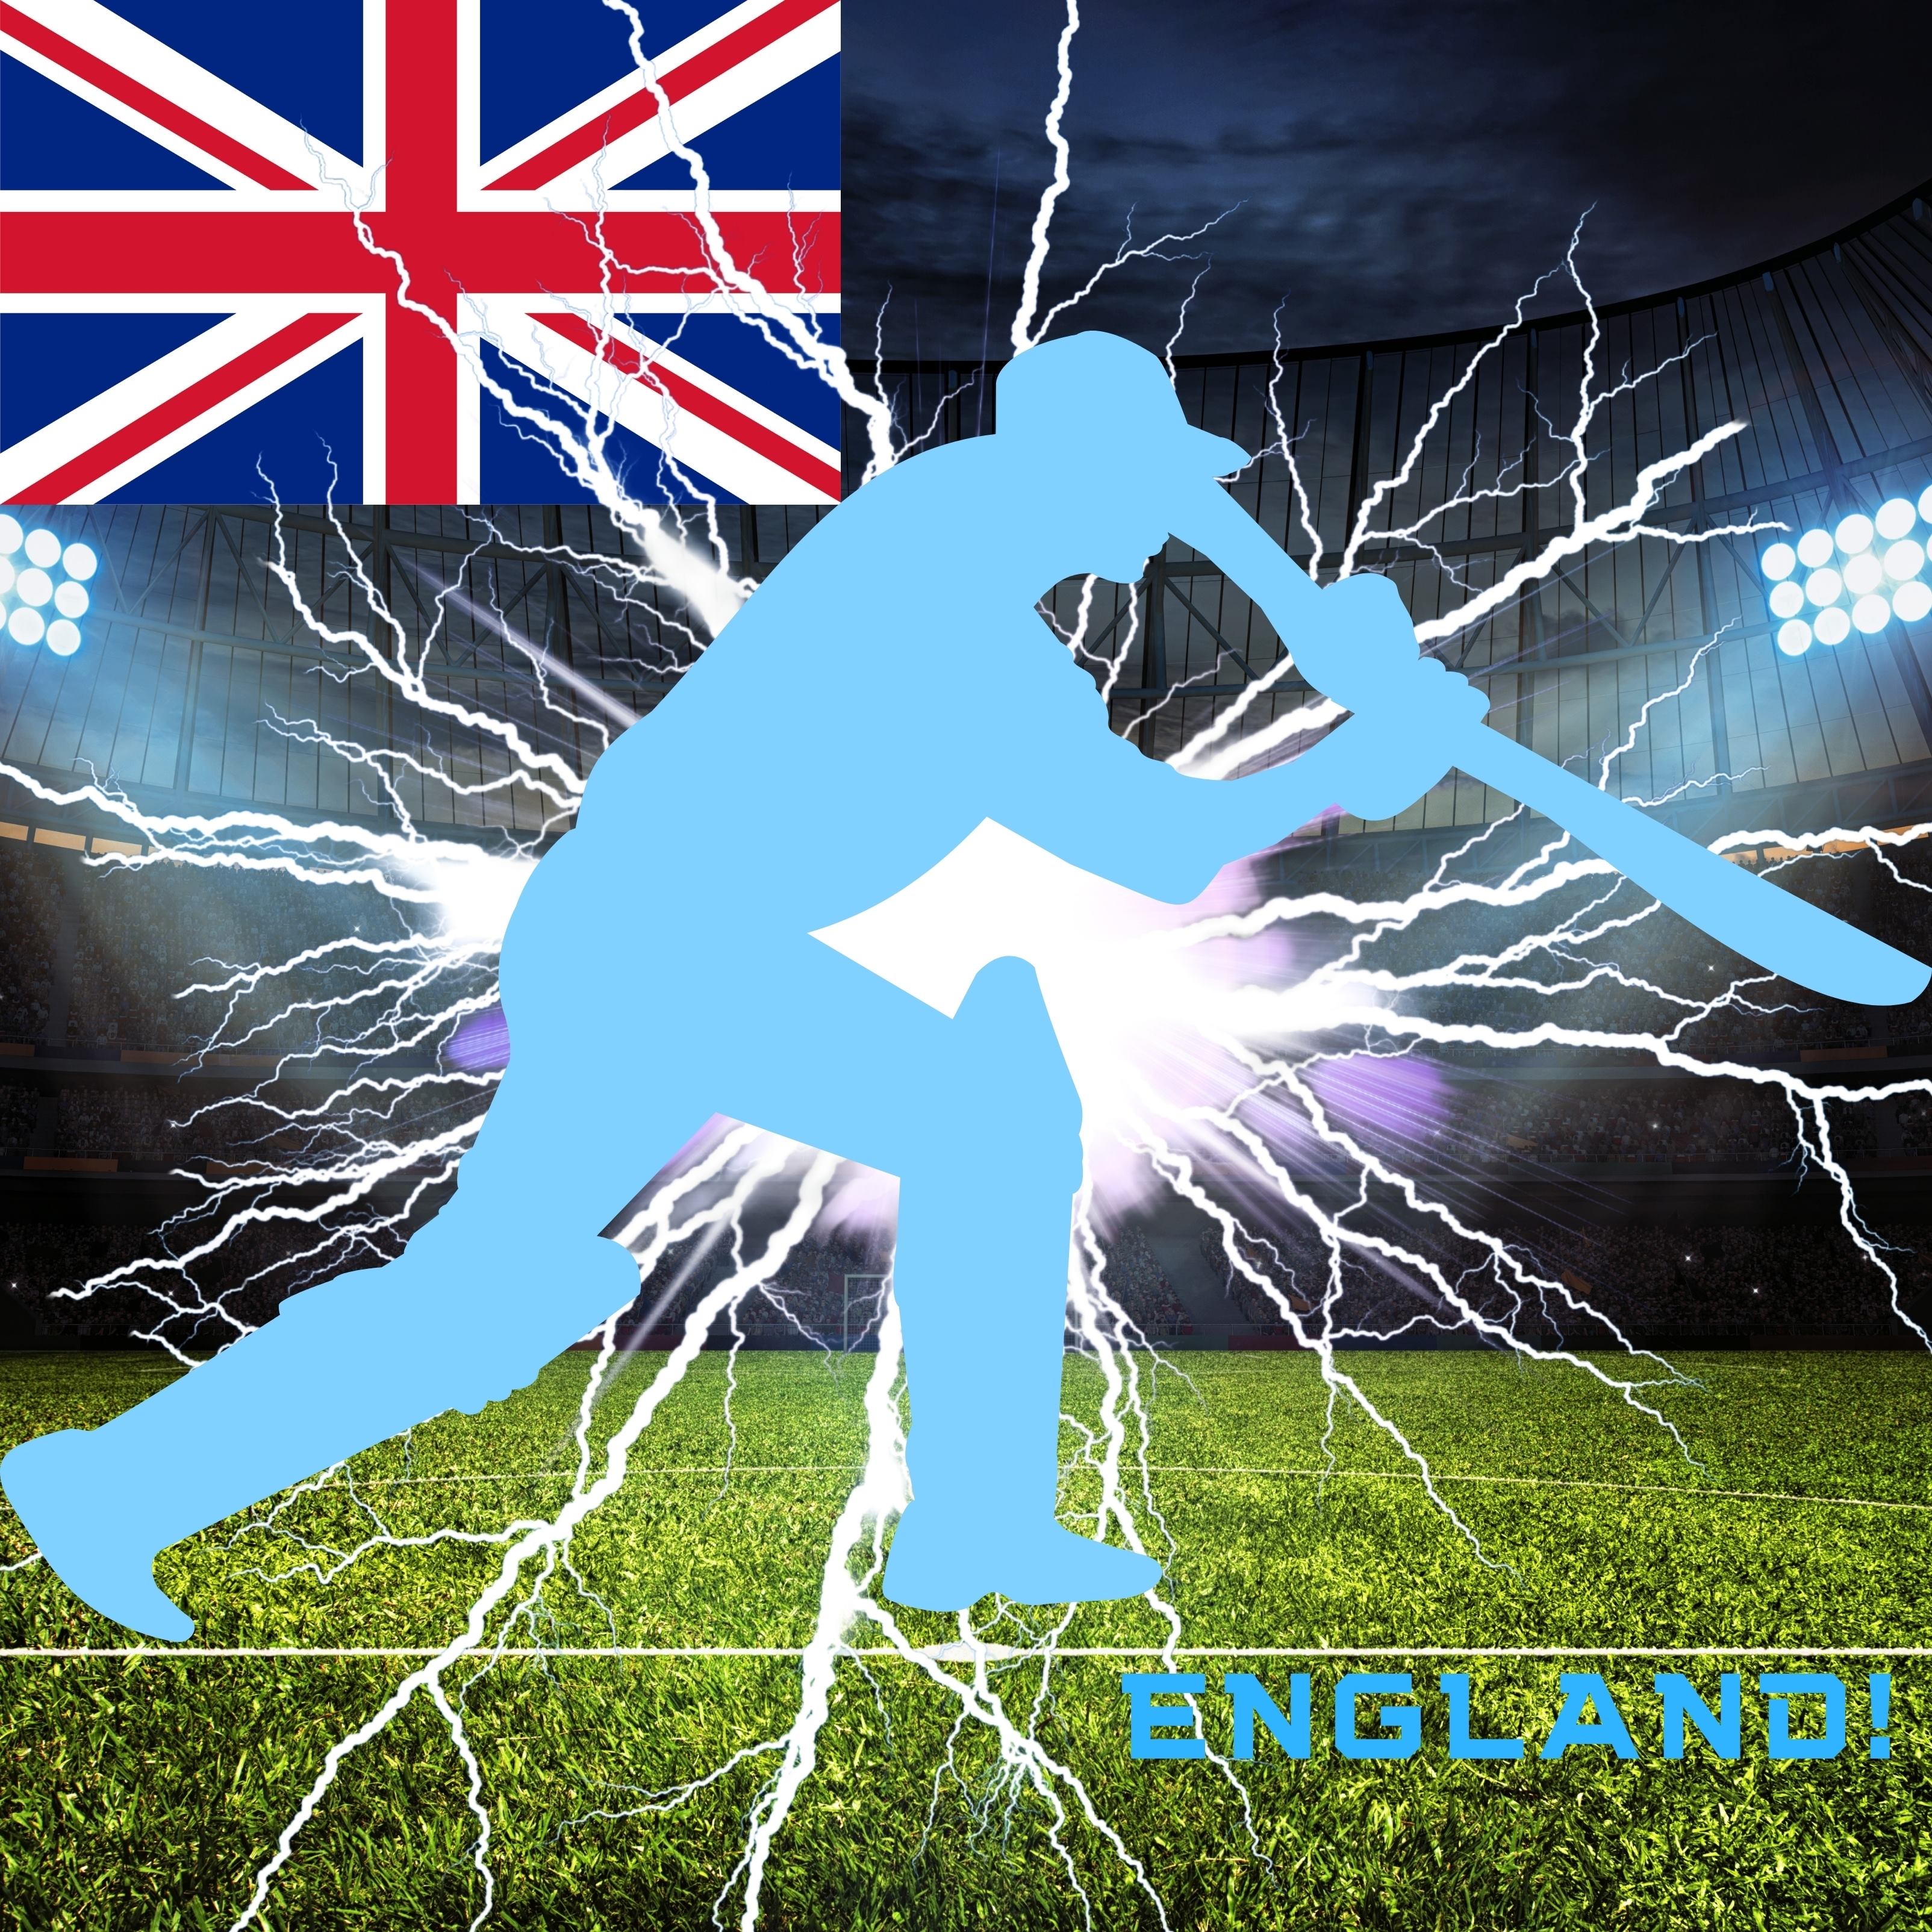 iPad Wallpapers England Cricket Stadium iPad Wallpaper 3208x3208 px